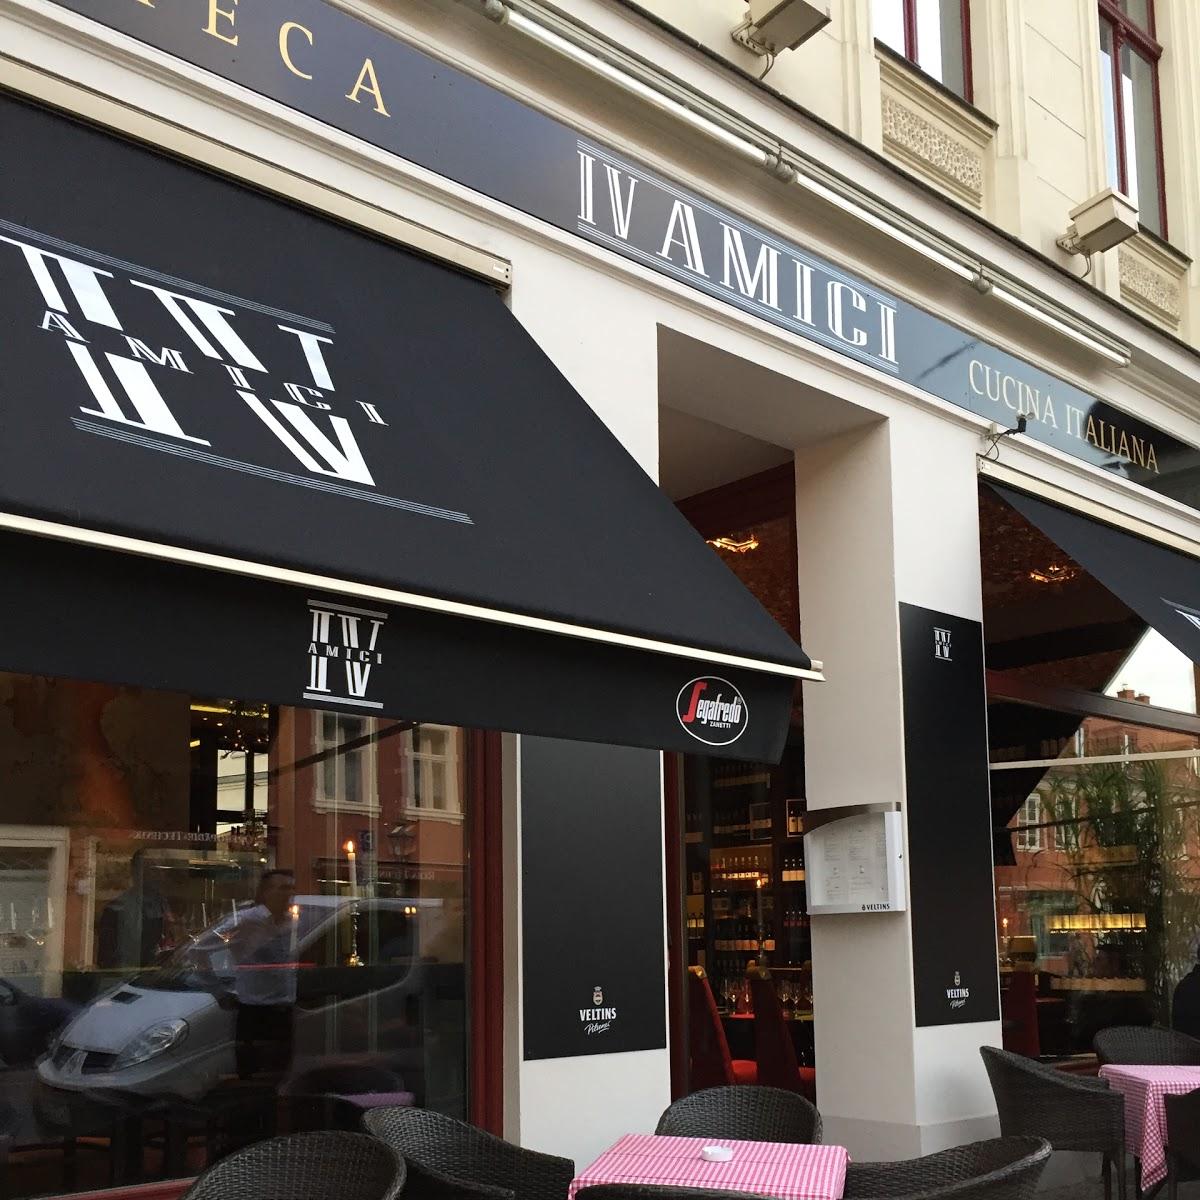 Restaurant "IV Amici" in Potsdam